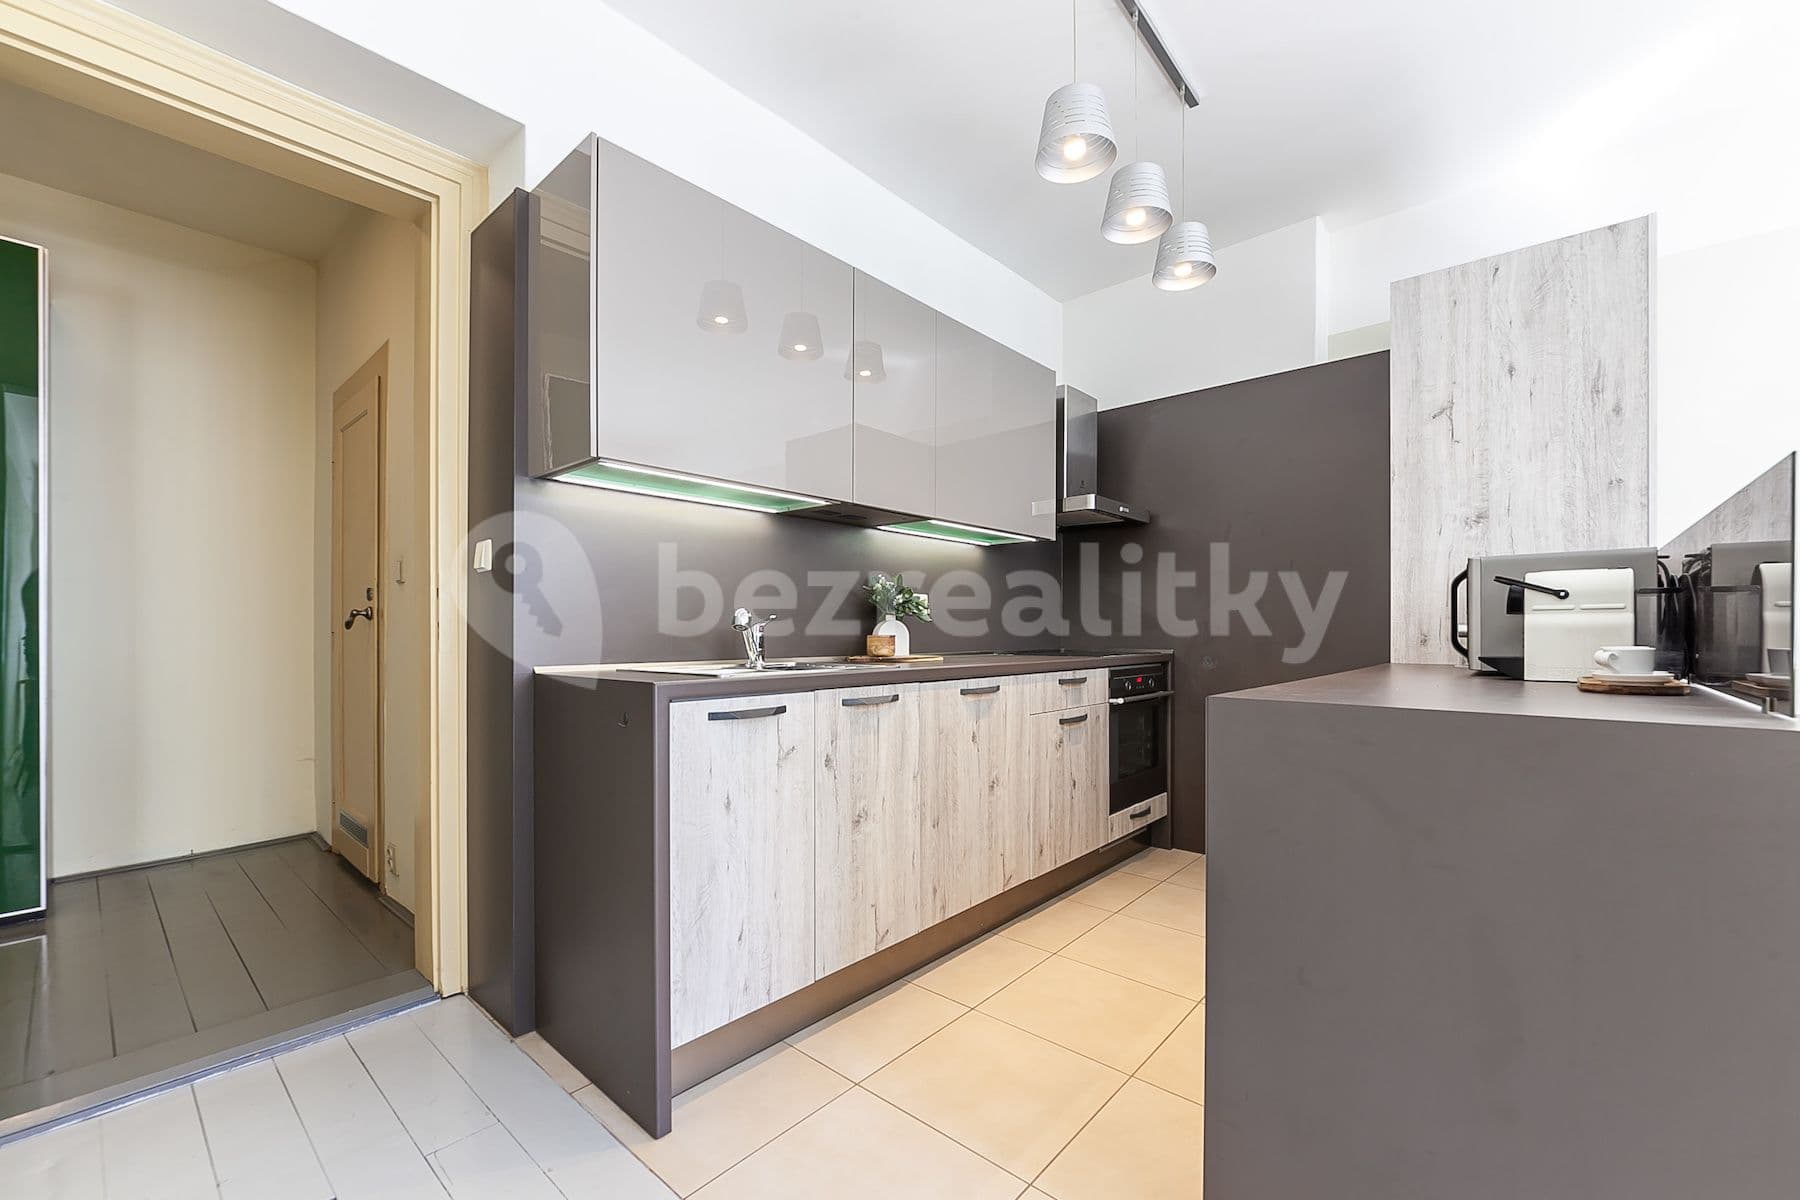 1 bedroom with open-plan kitchen flat for sale, 58 m², Sokolovská, Prague, Prague